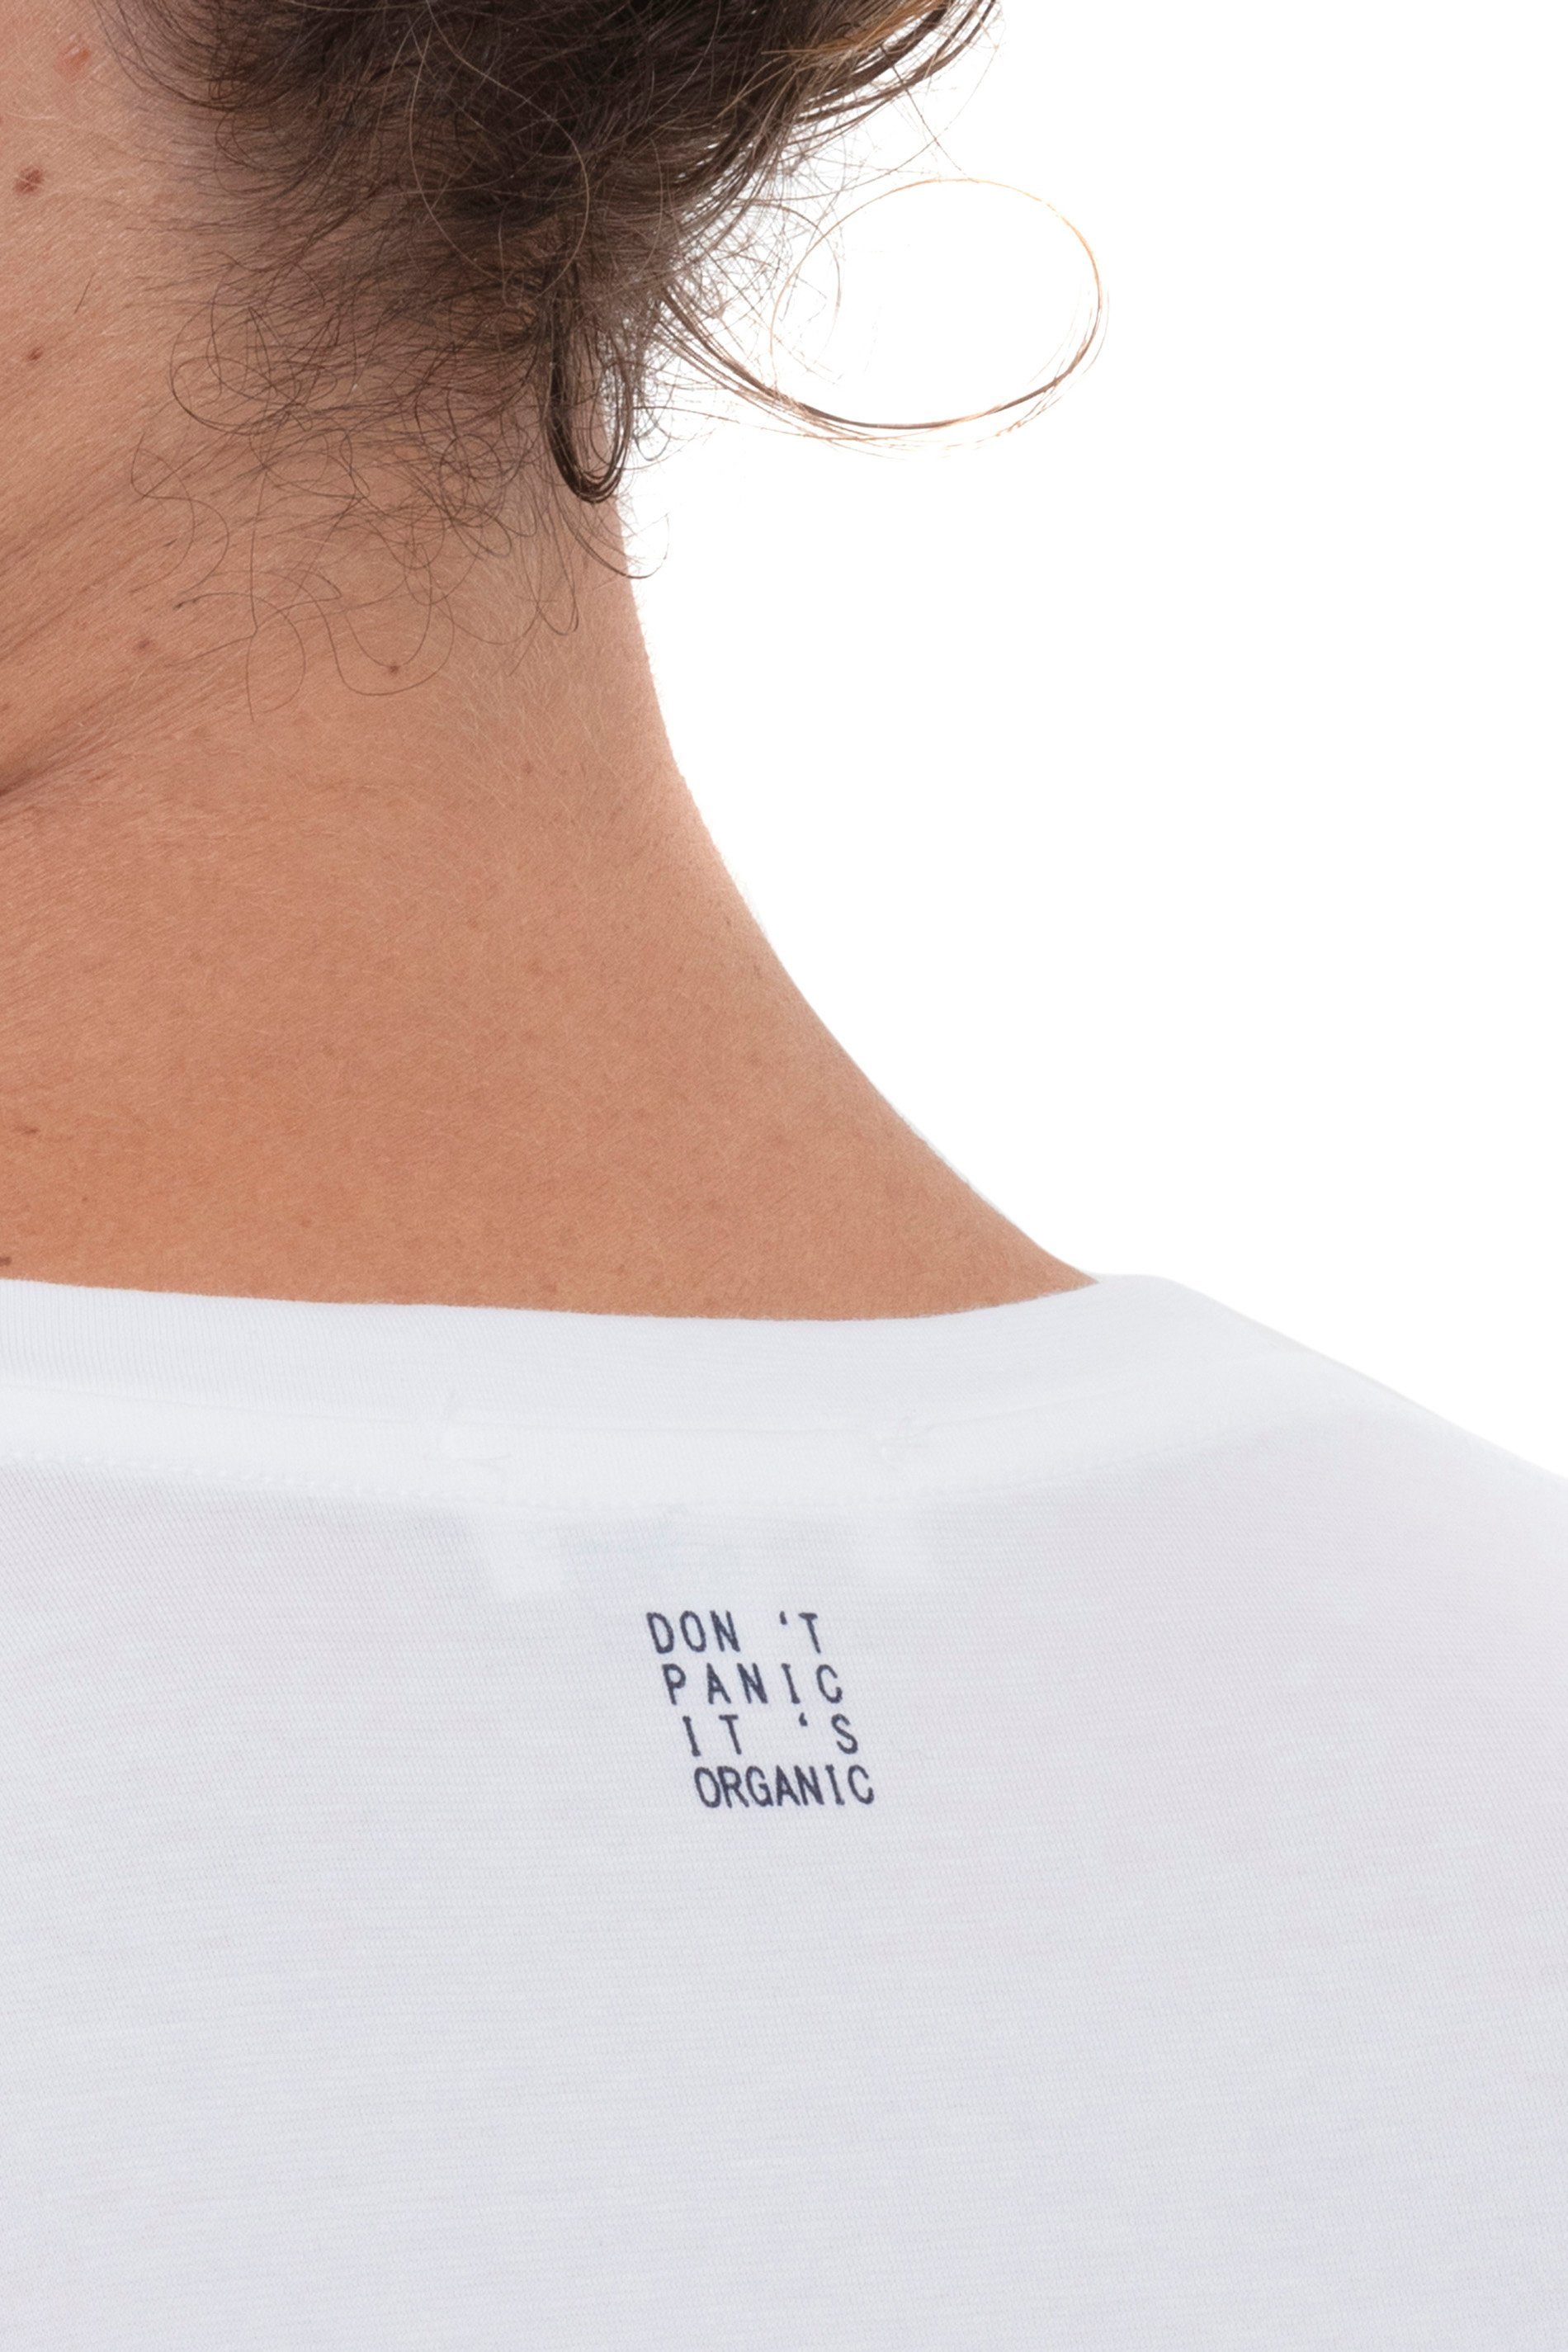 Bio-Baumwolle Mey Organic" It's Funktionsshirt weiss Panic Herren T-Shirt "Don't